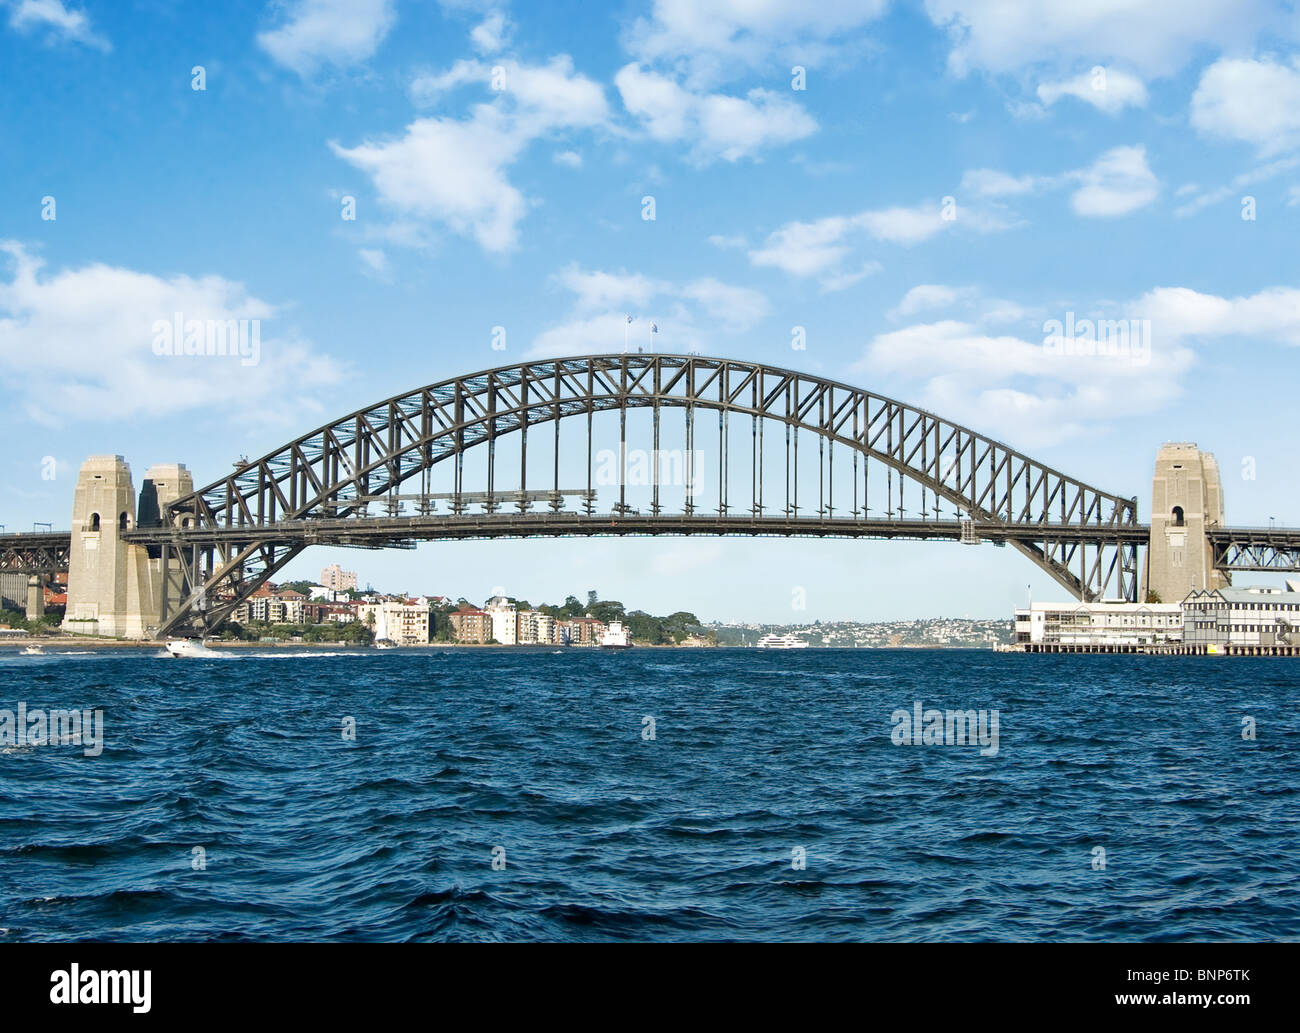 a great image of sydney harbour bridge Stock Photo